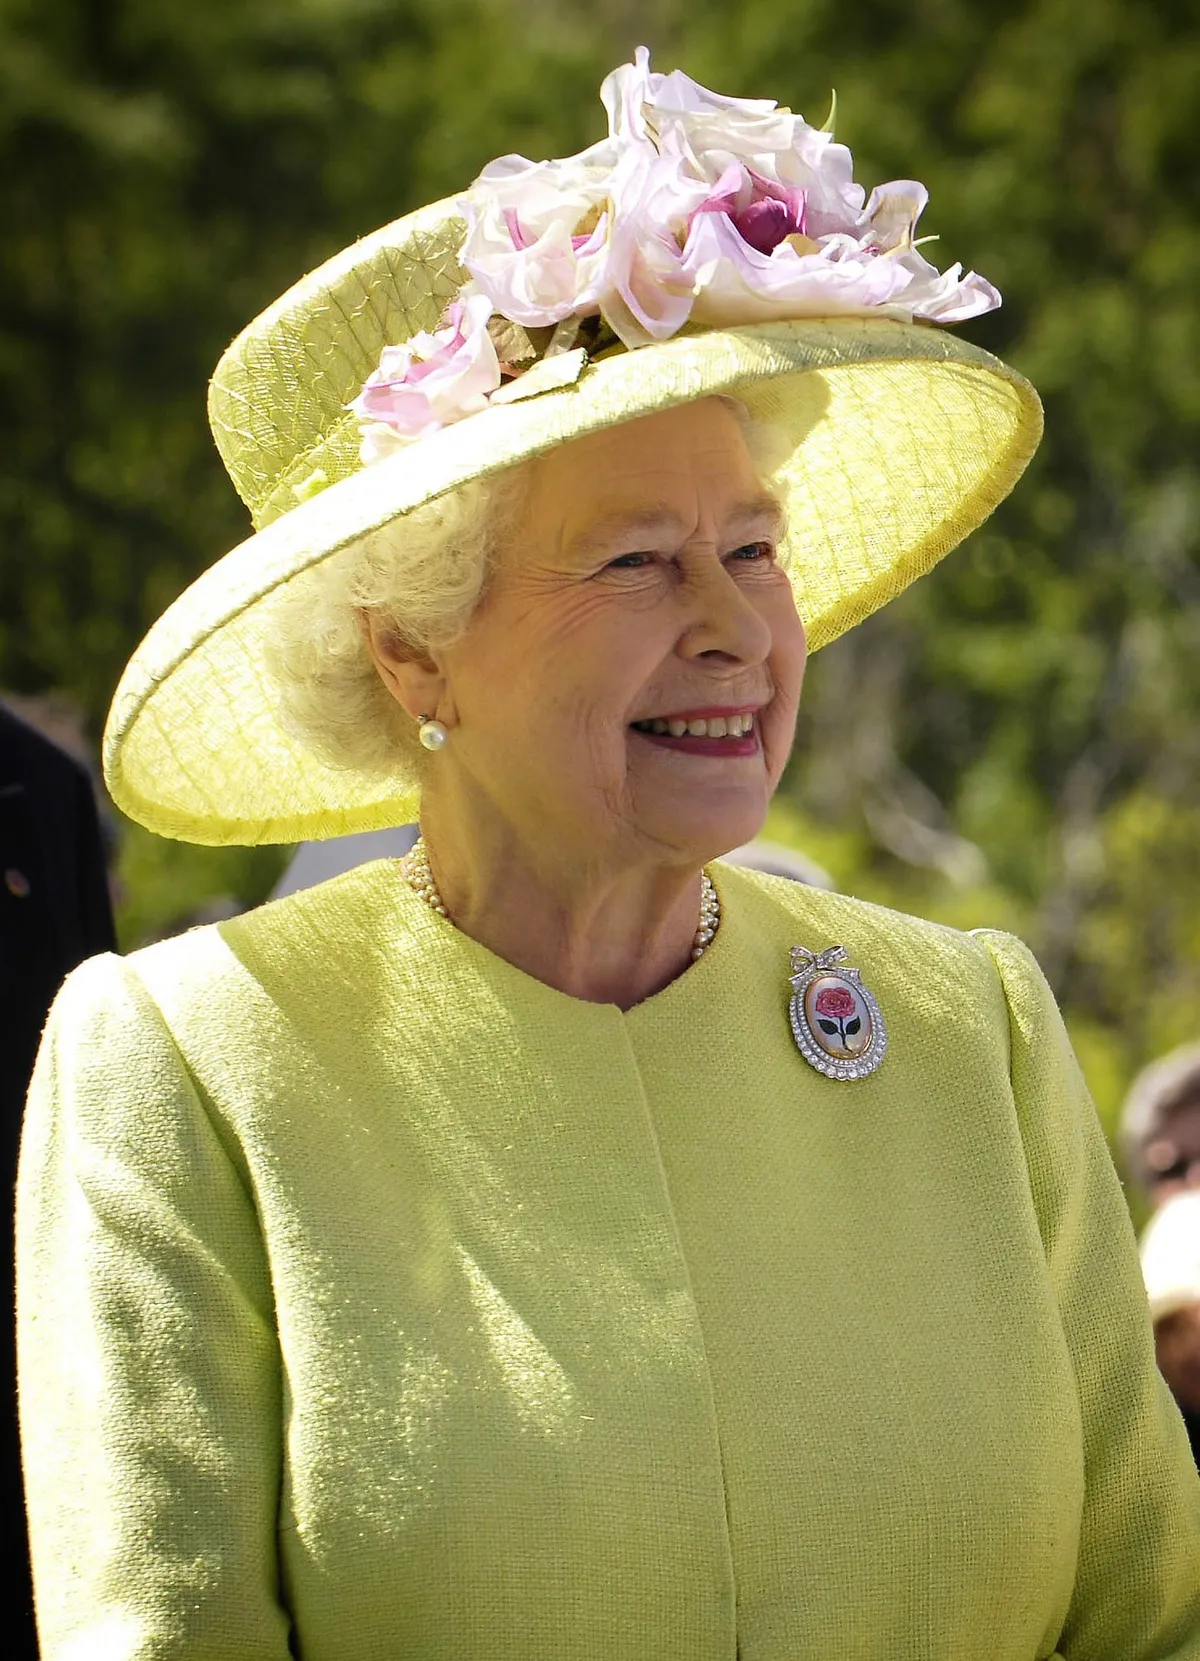 Queen Elizabeth II in a yellow dress and hat